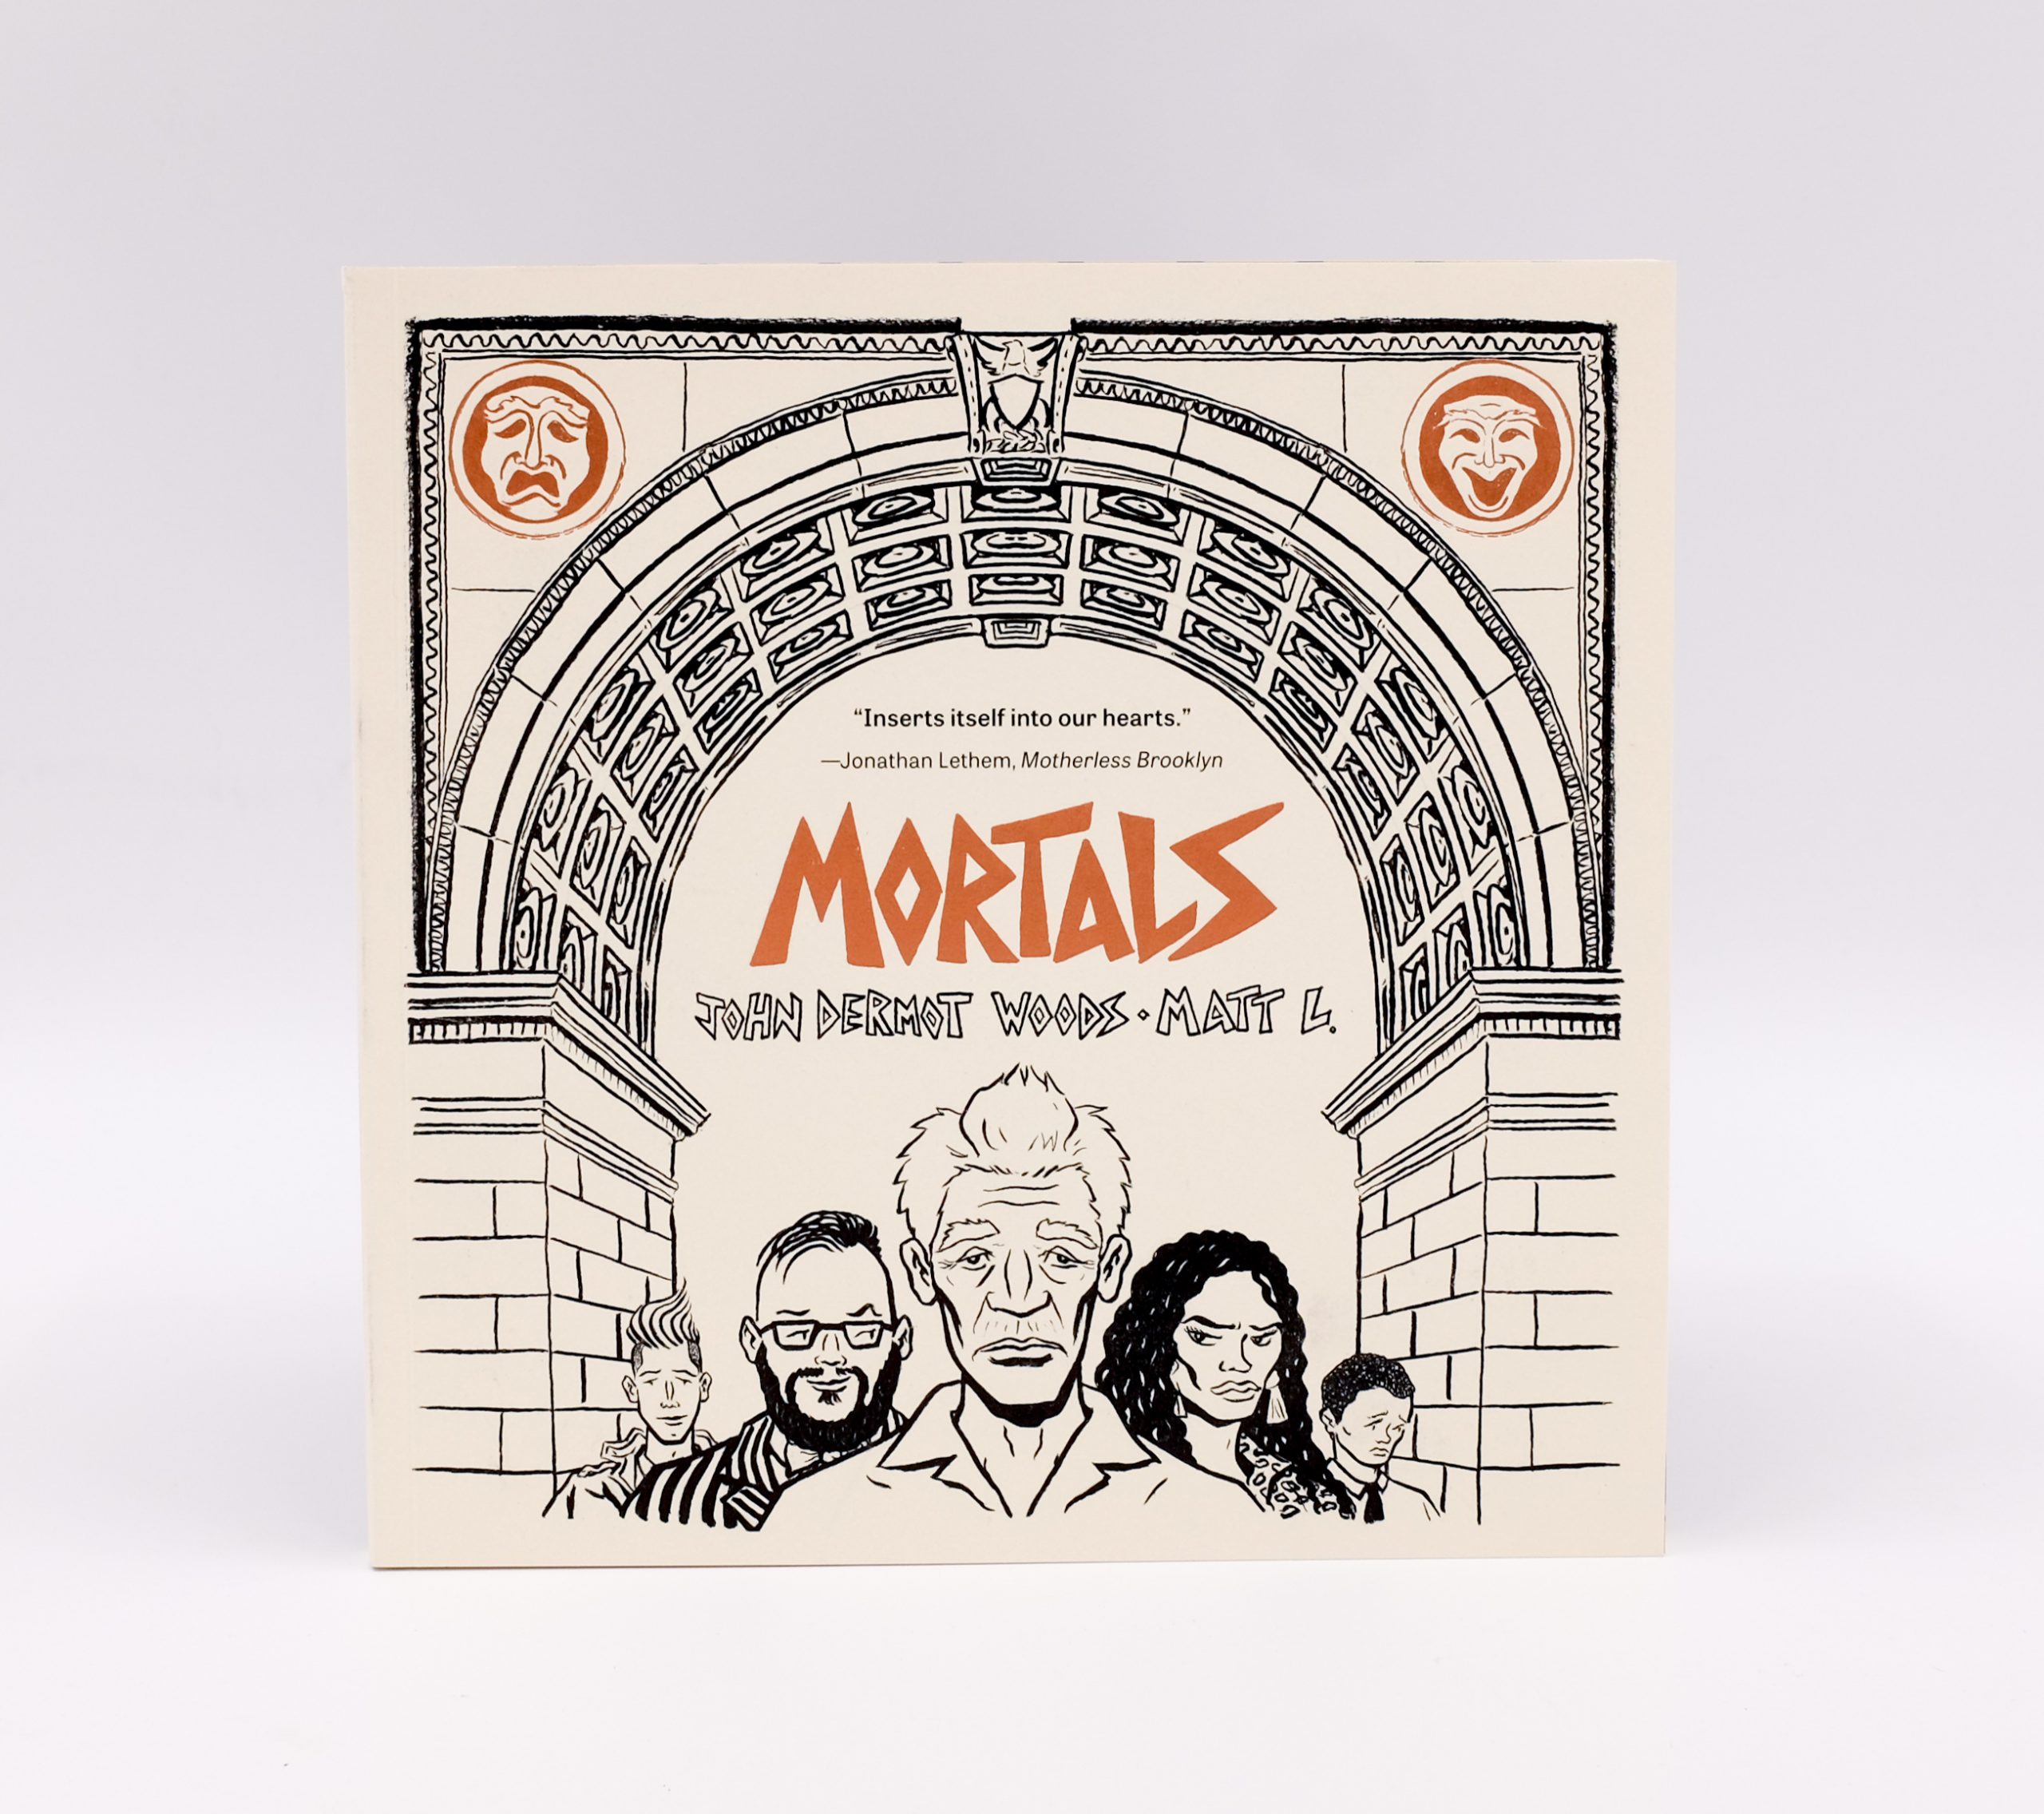 MORTALS, written by John Dermot Woods, illustrated by Matt L.